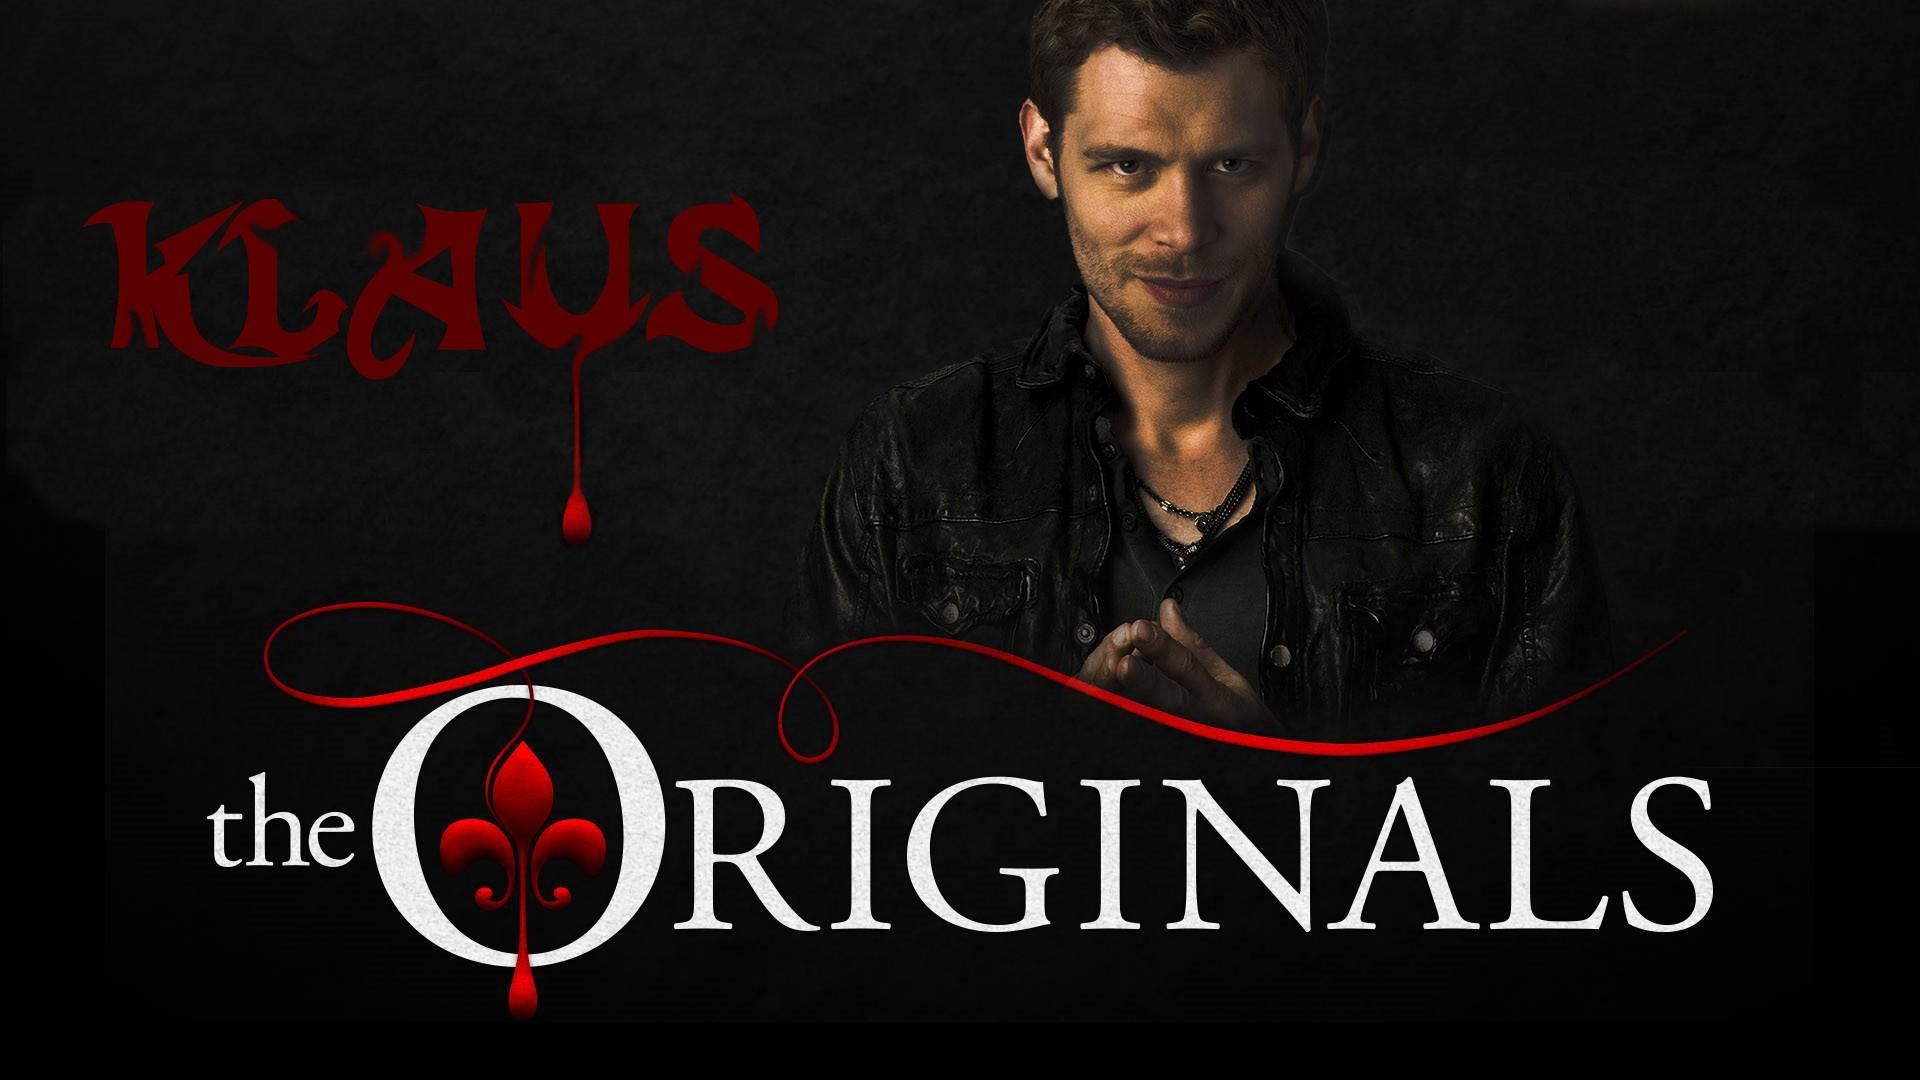 Klaus, The Originals, Joseph Morgan Wallpaper HD / Desktop and Mobile Background